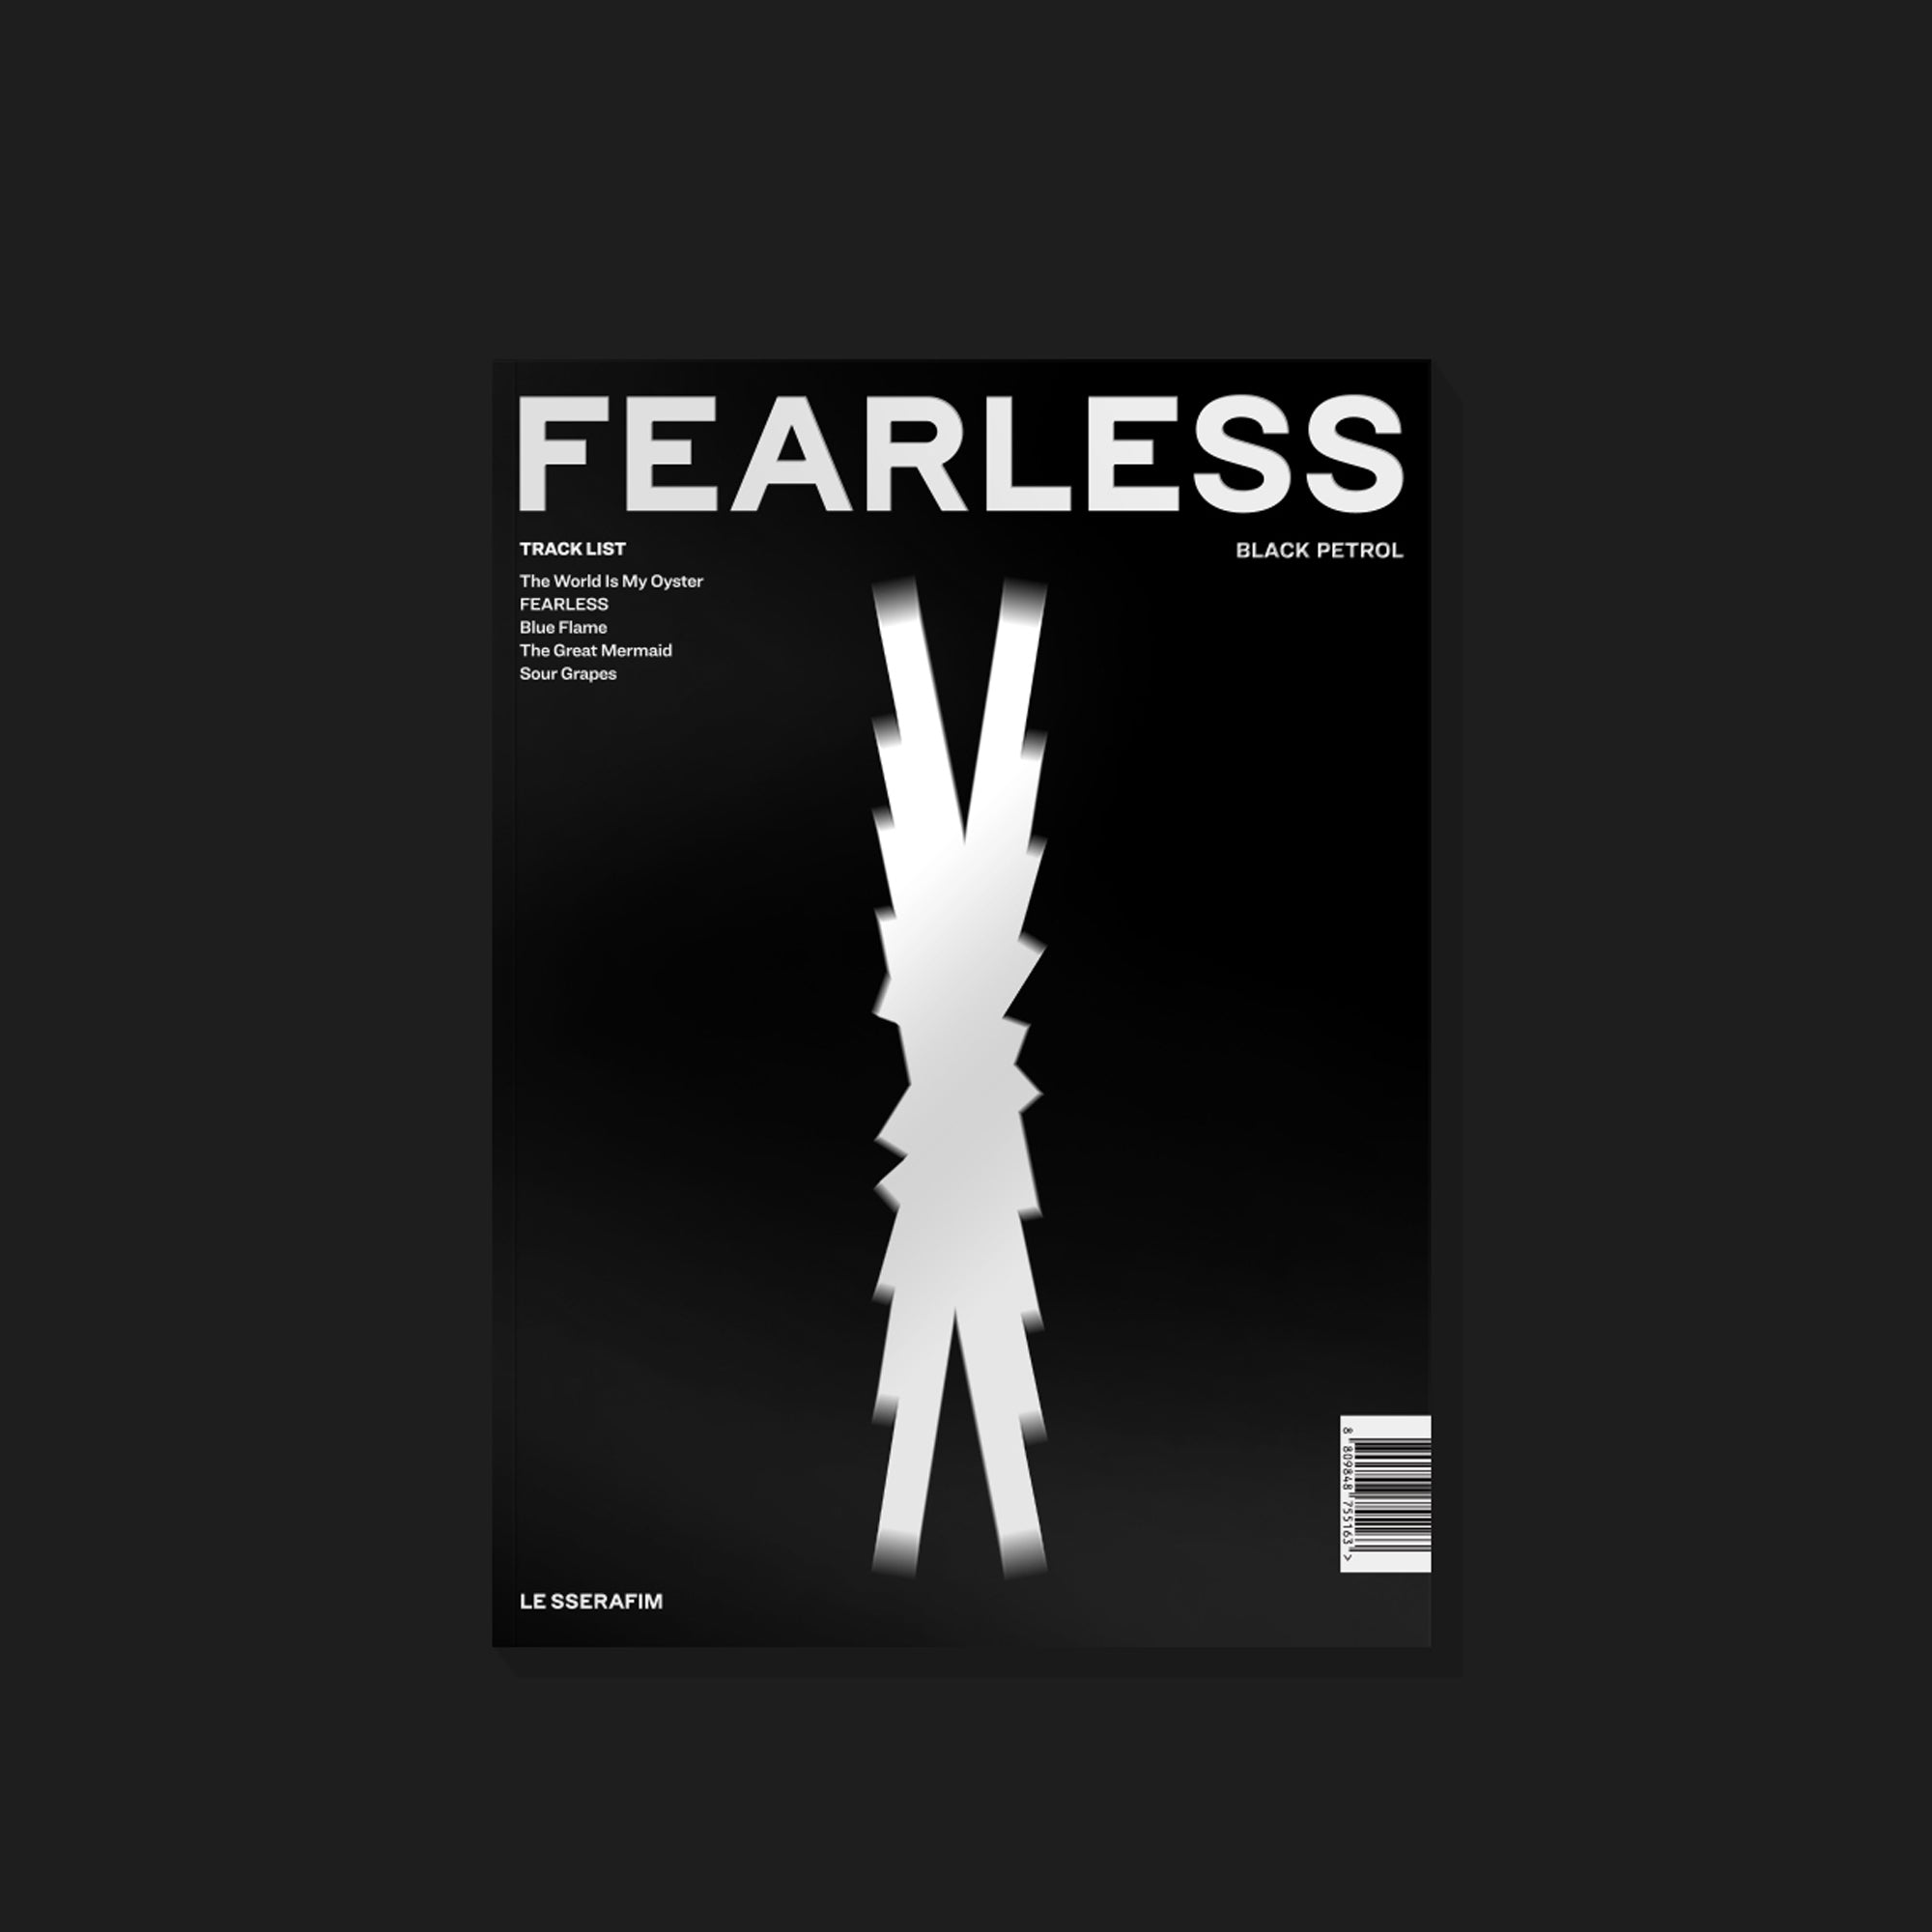 LE SSERAFIM 1ST MINI ALBUM 'FEARLESS' BLACK PETROL COVER